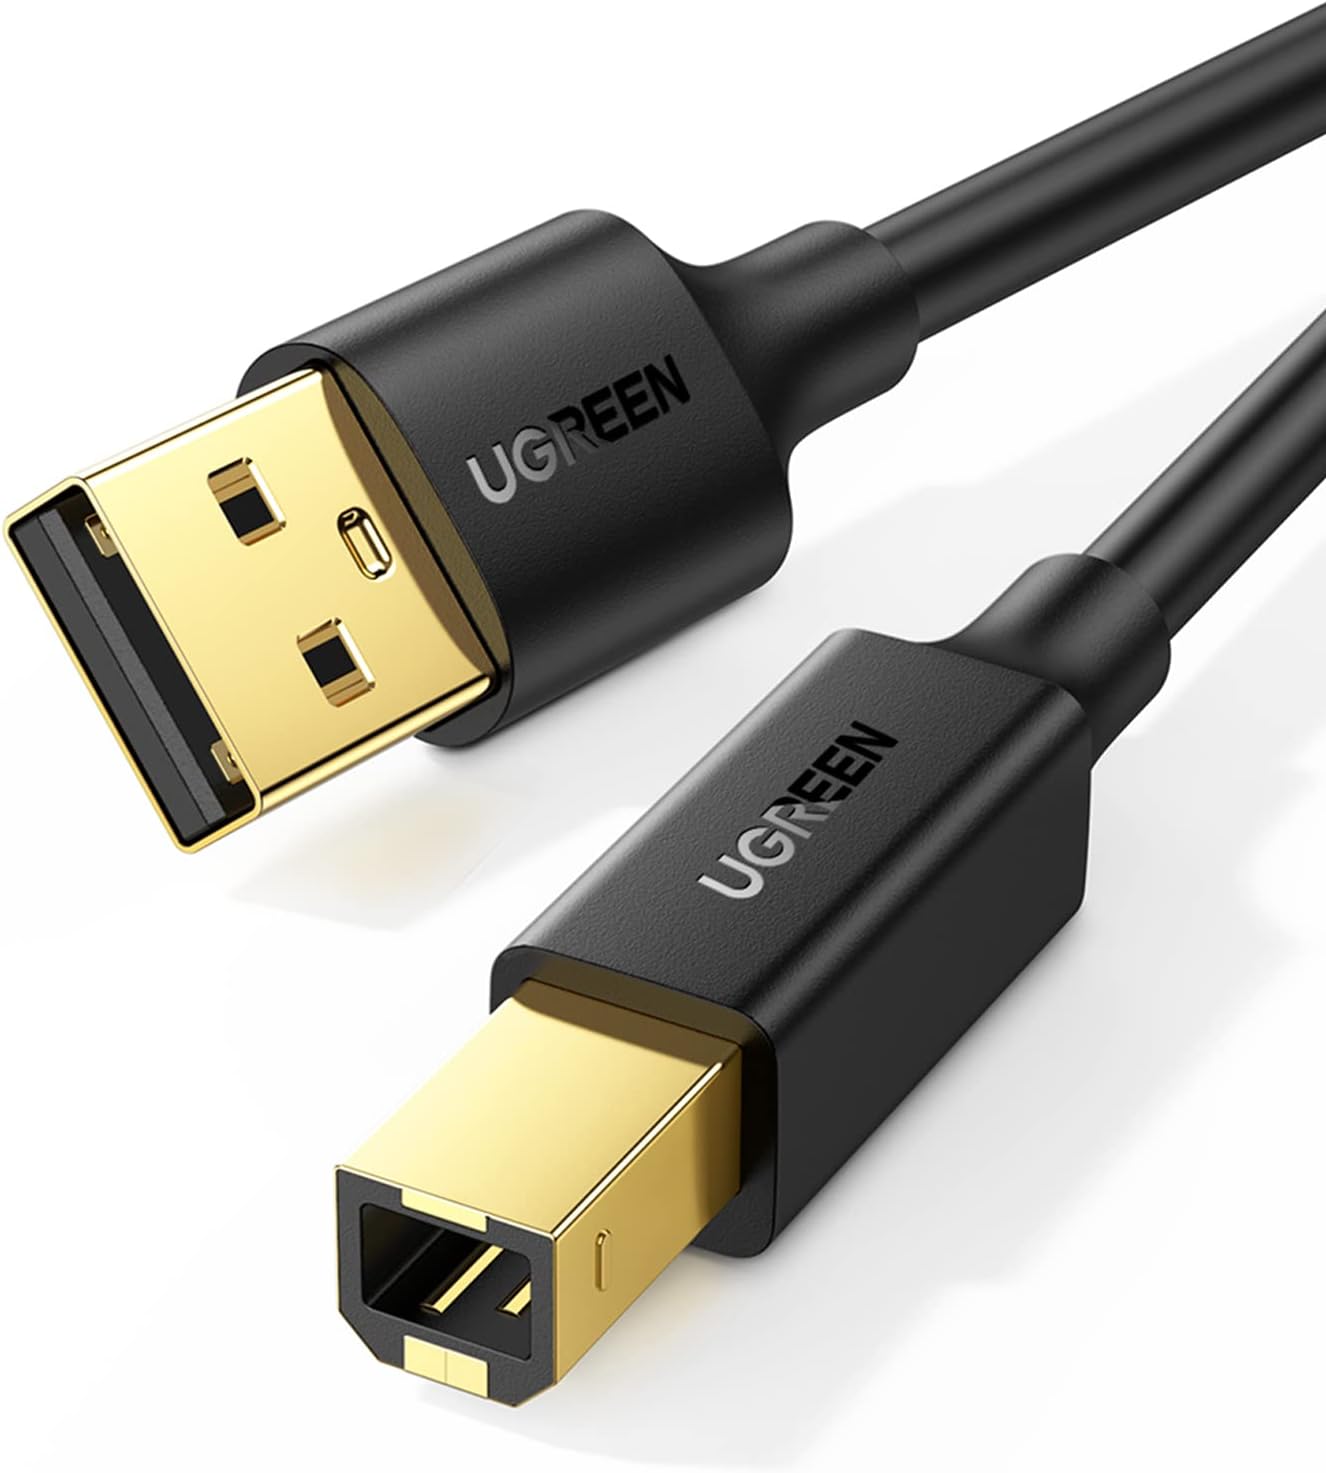 UGreen USB 2.0 Printer Cable 1.5M - Black